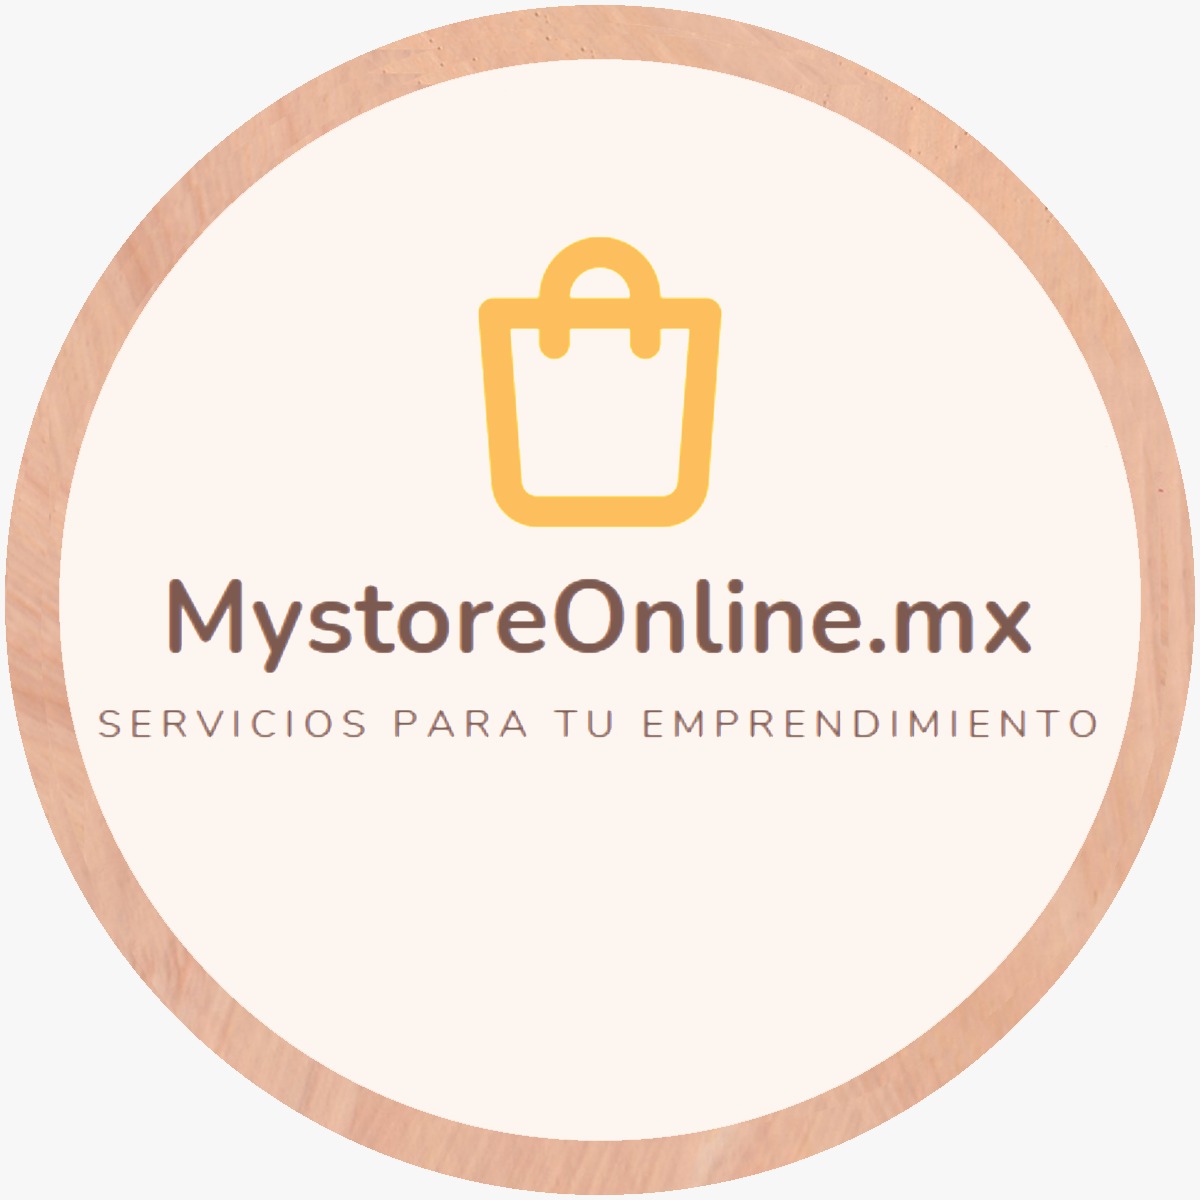 Mystoreonline.mx